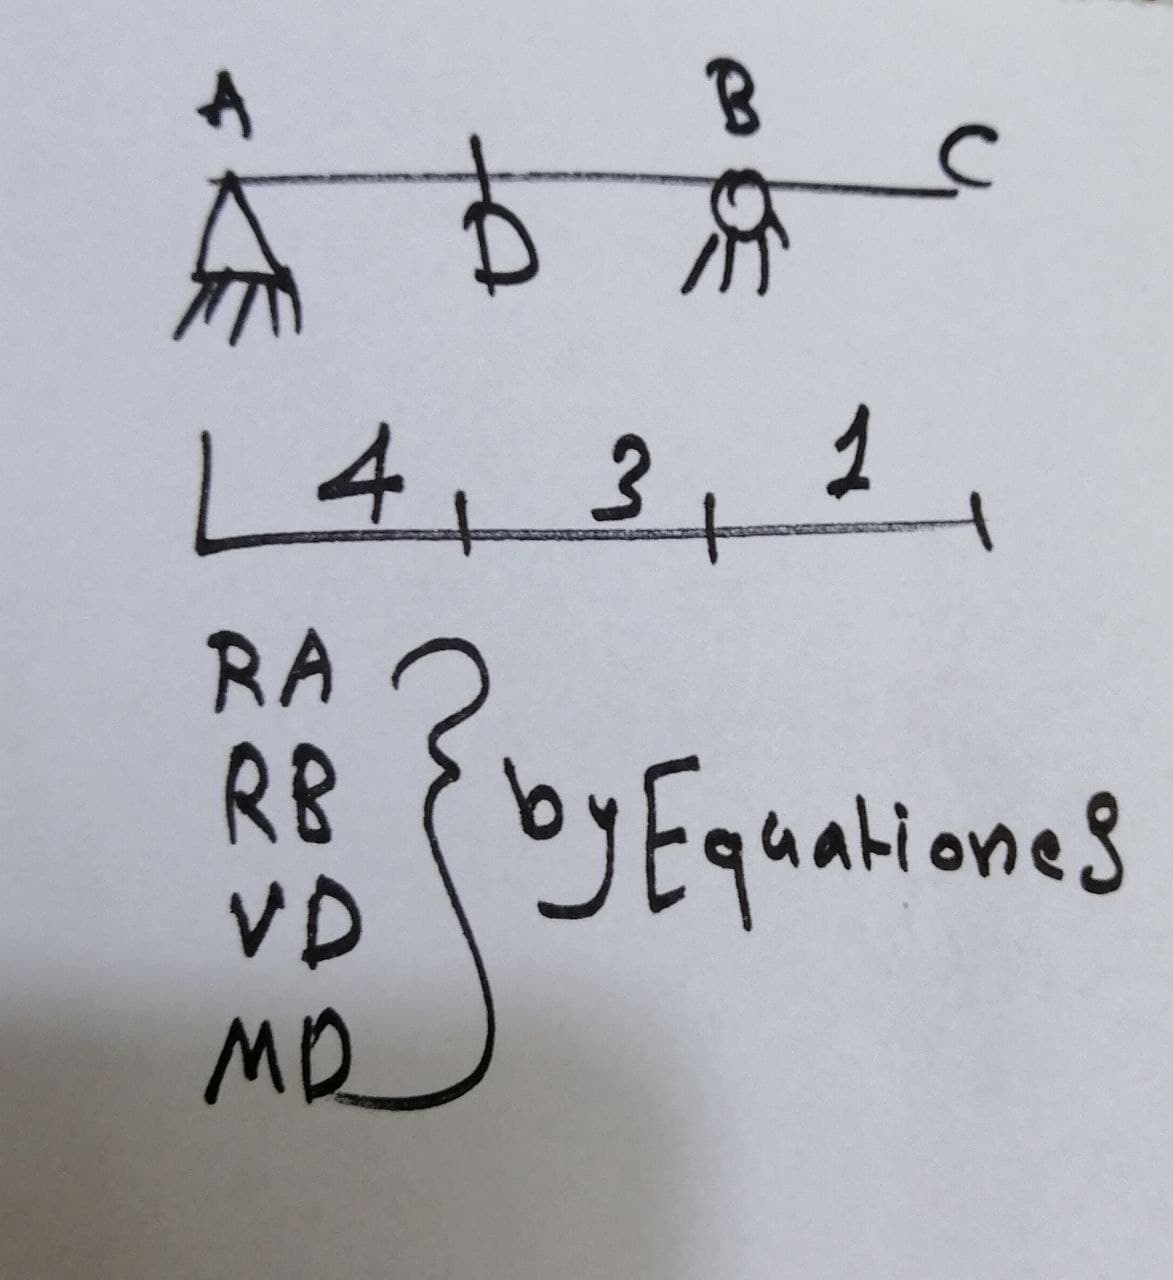 $
B
&
L 4, 3
RA
RB (by Equationes
Hones
VD
мо
1
+
1